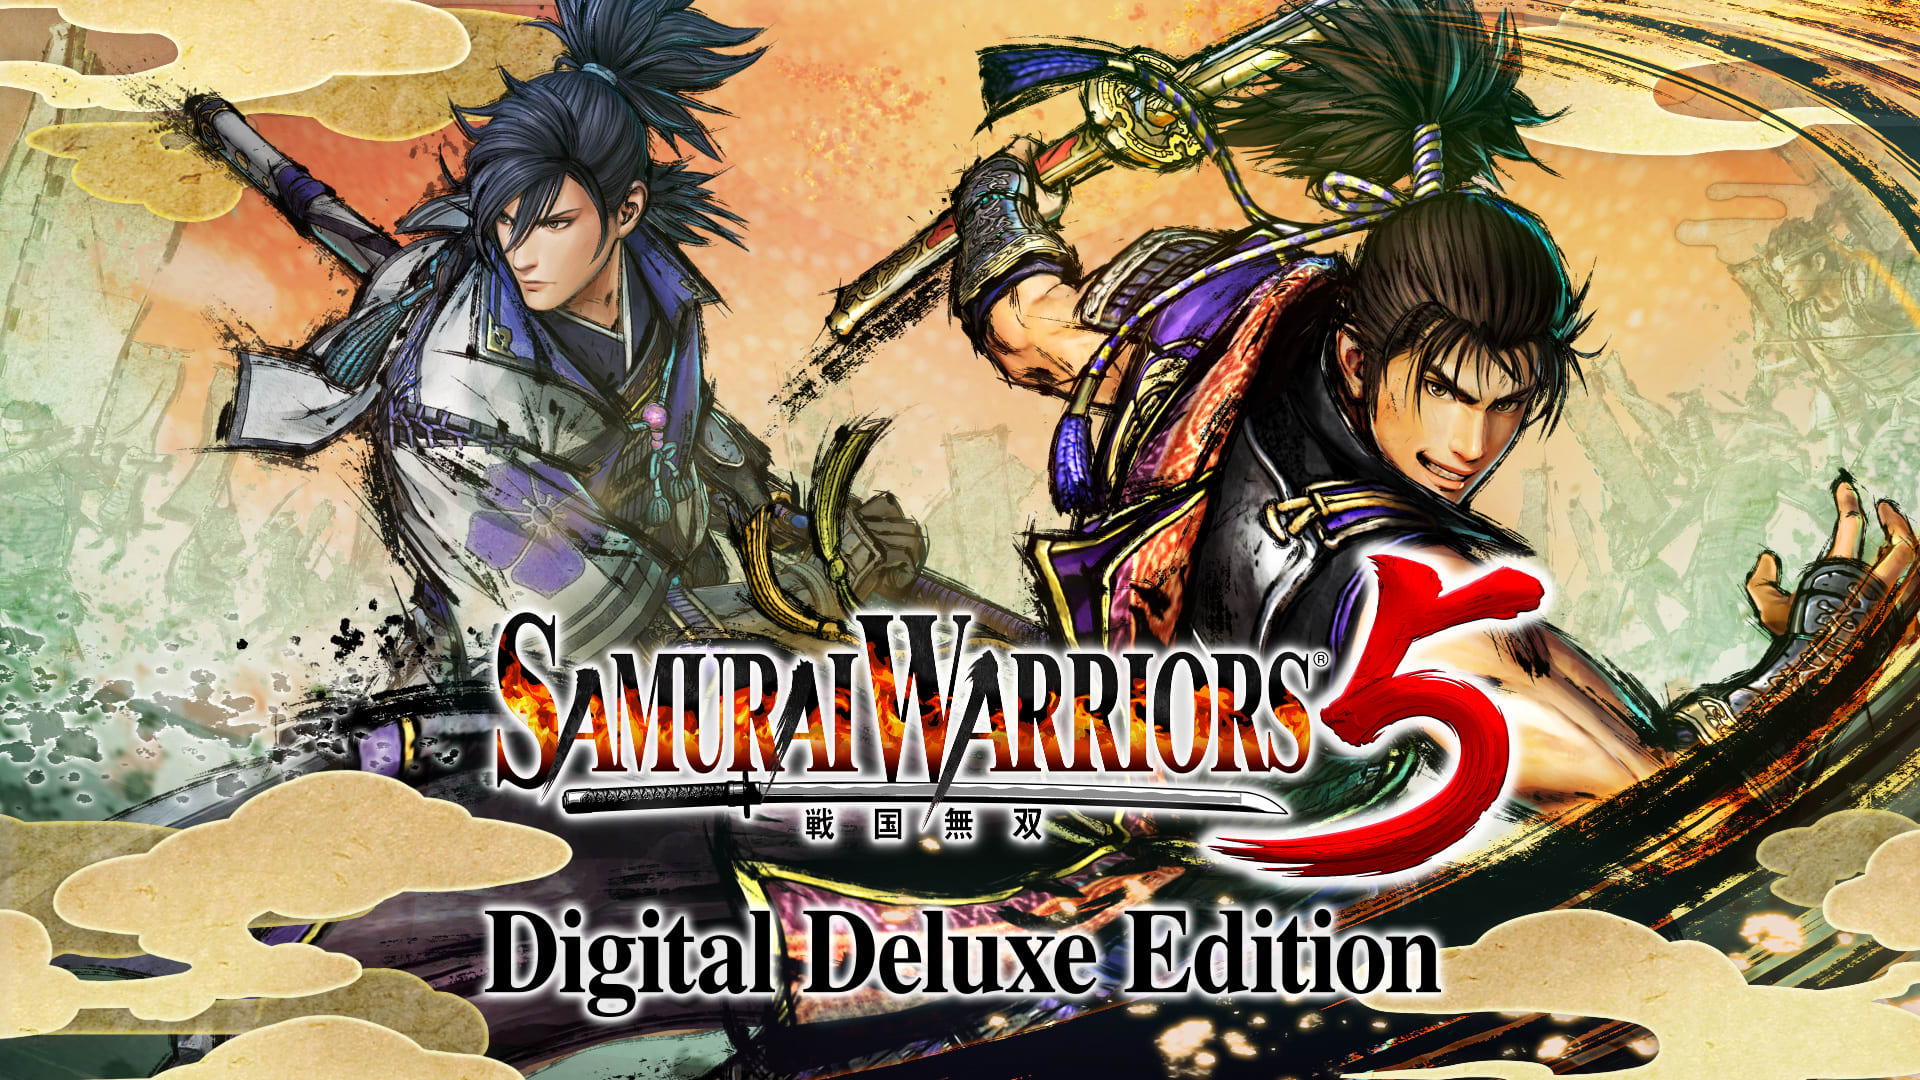 SAMURAI WARRIORS 5 Digital Deluxe Edition